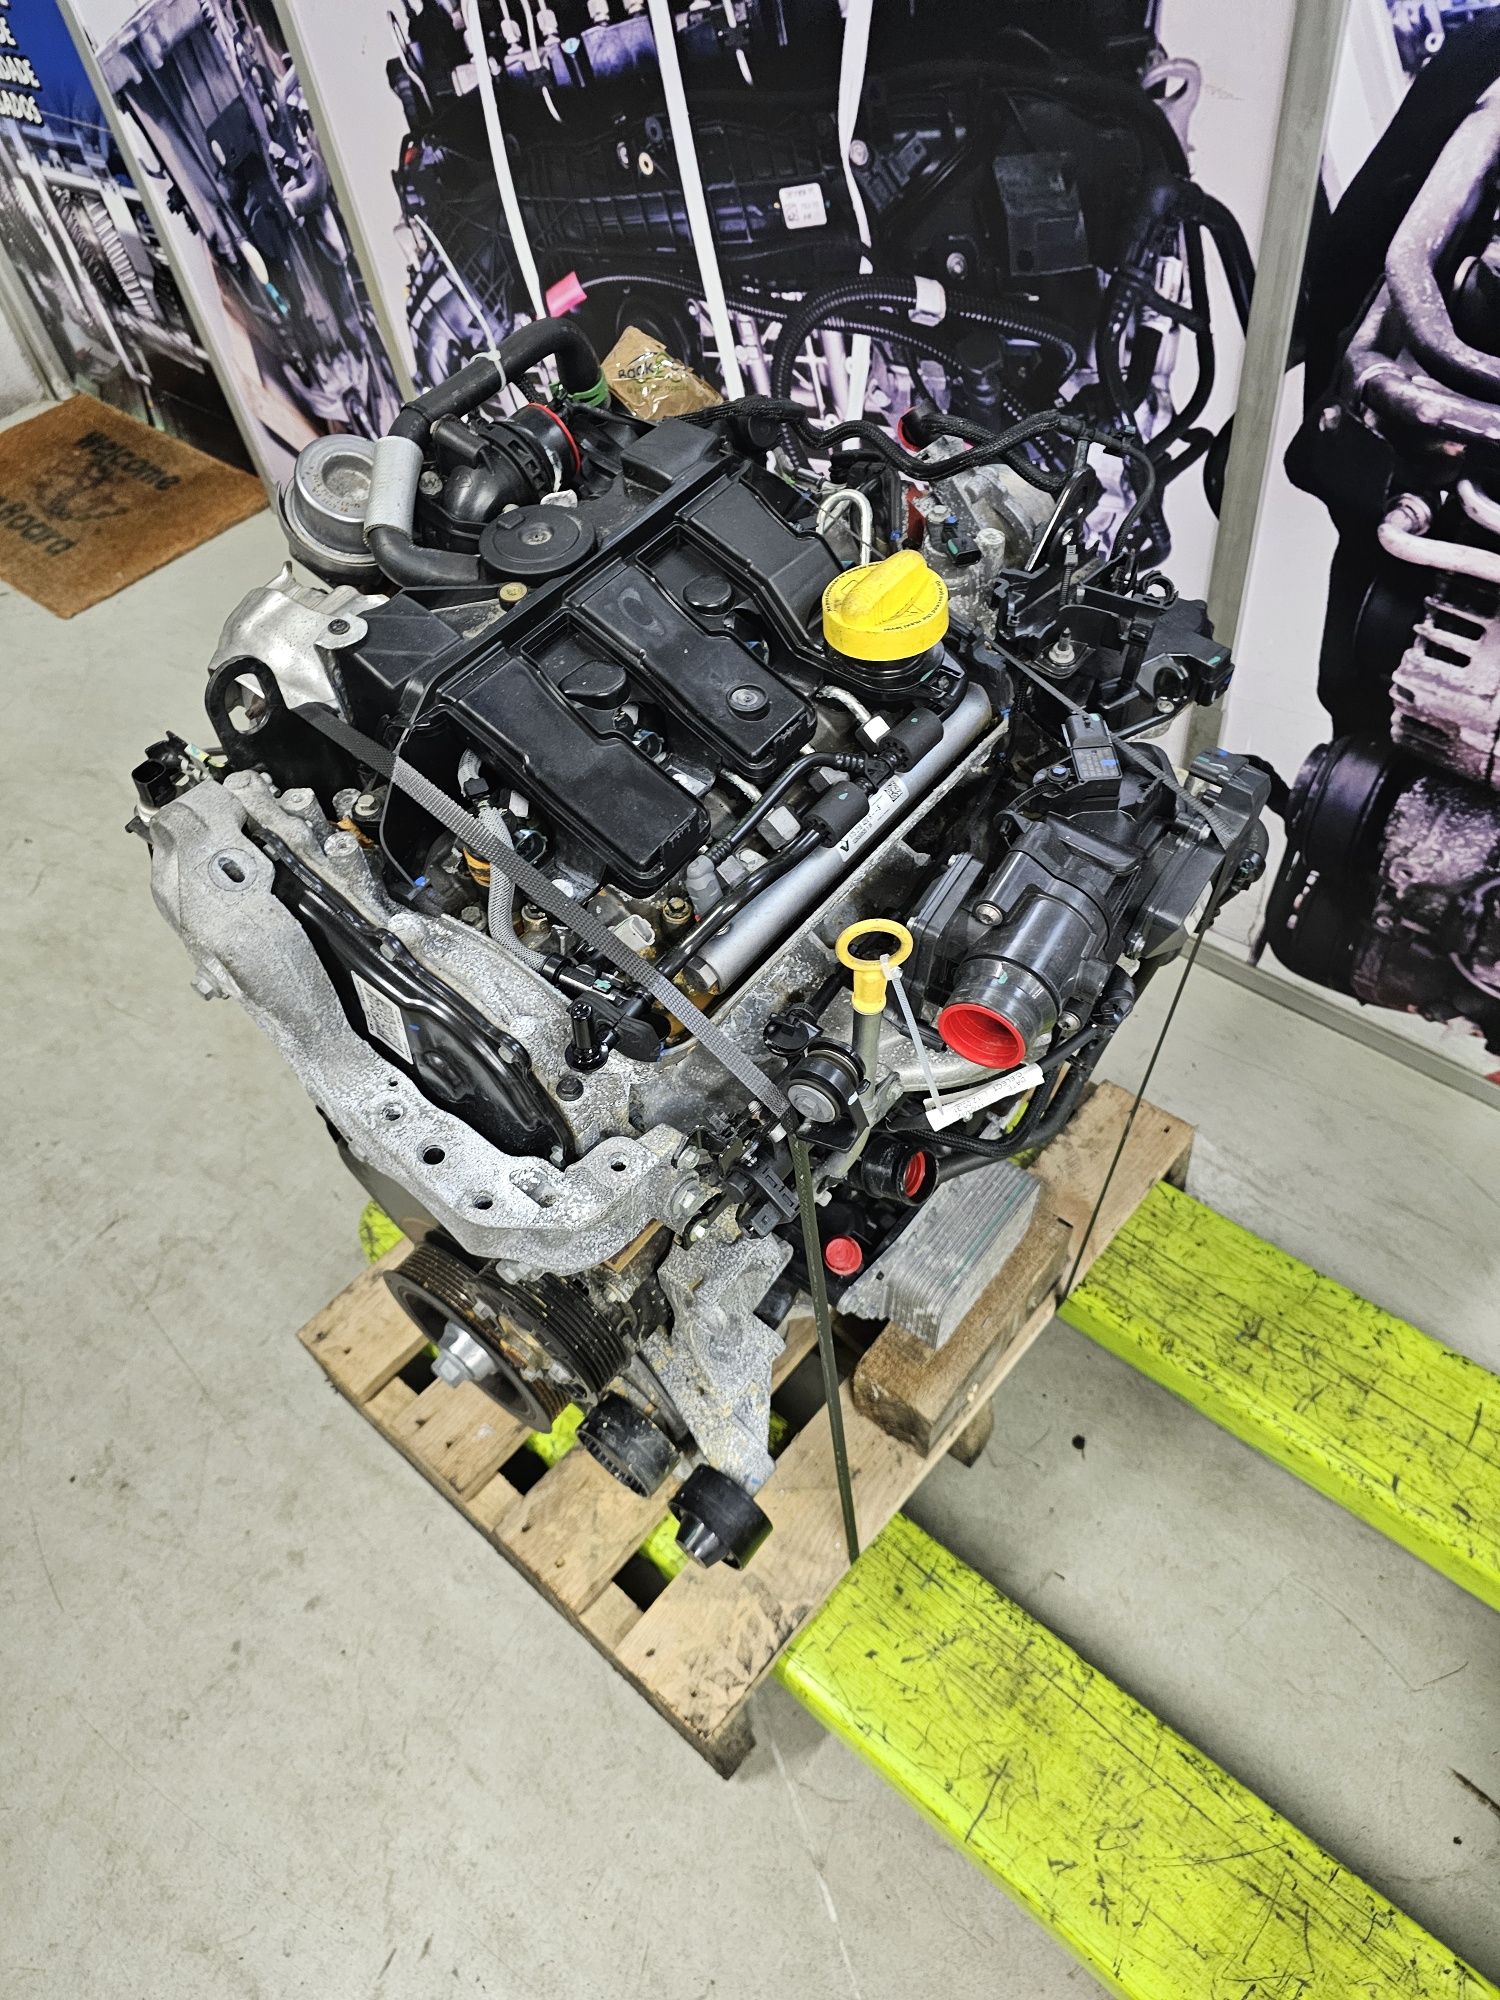 Motor Renault Scenic 1.6 DCI 2014, ref R9M 404